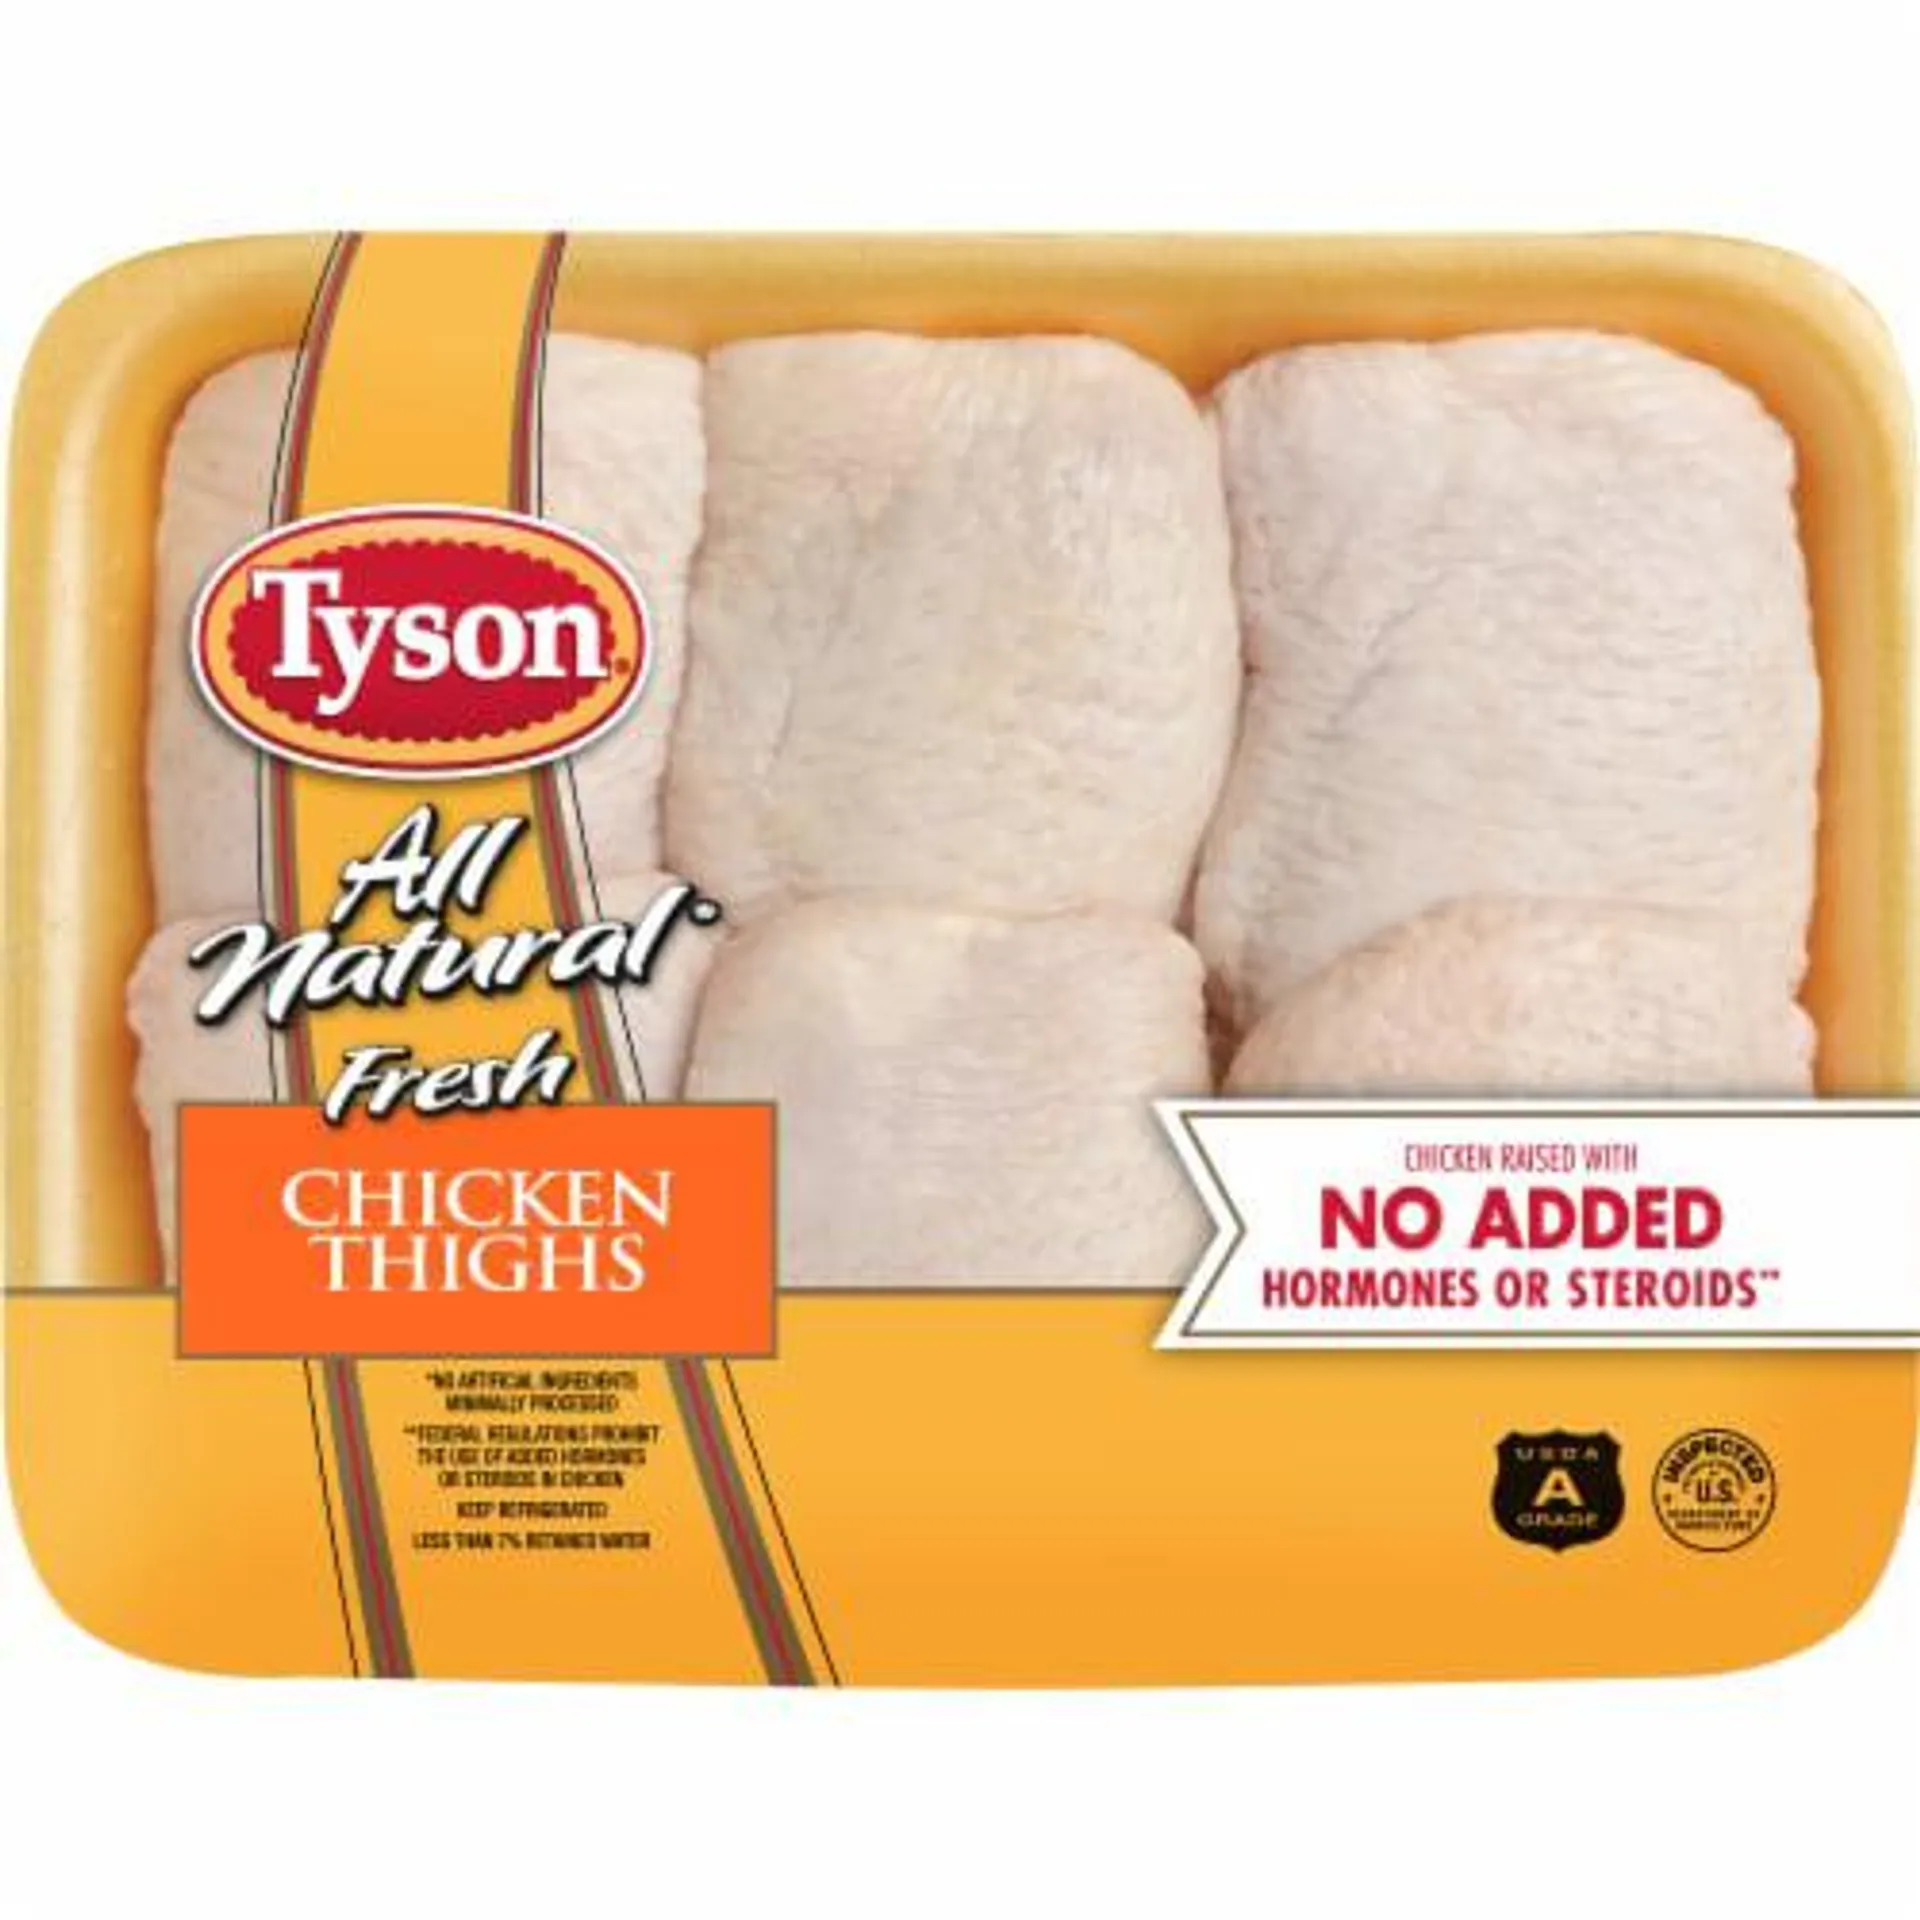 Tyson All Natural Fresh Chicken Thighs